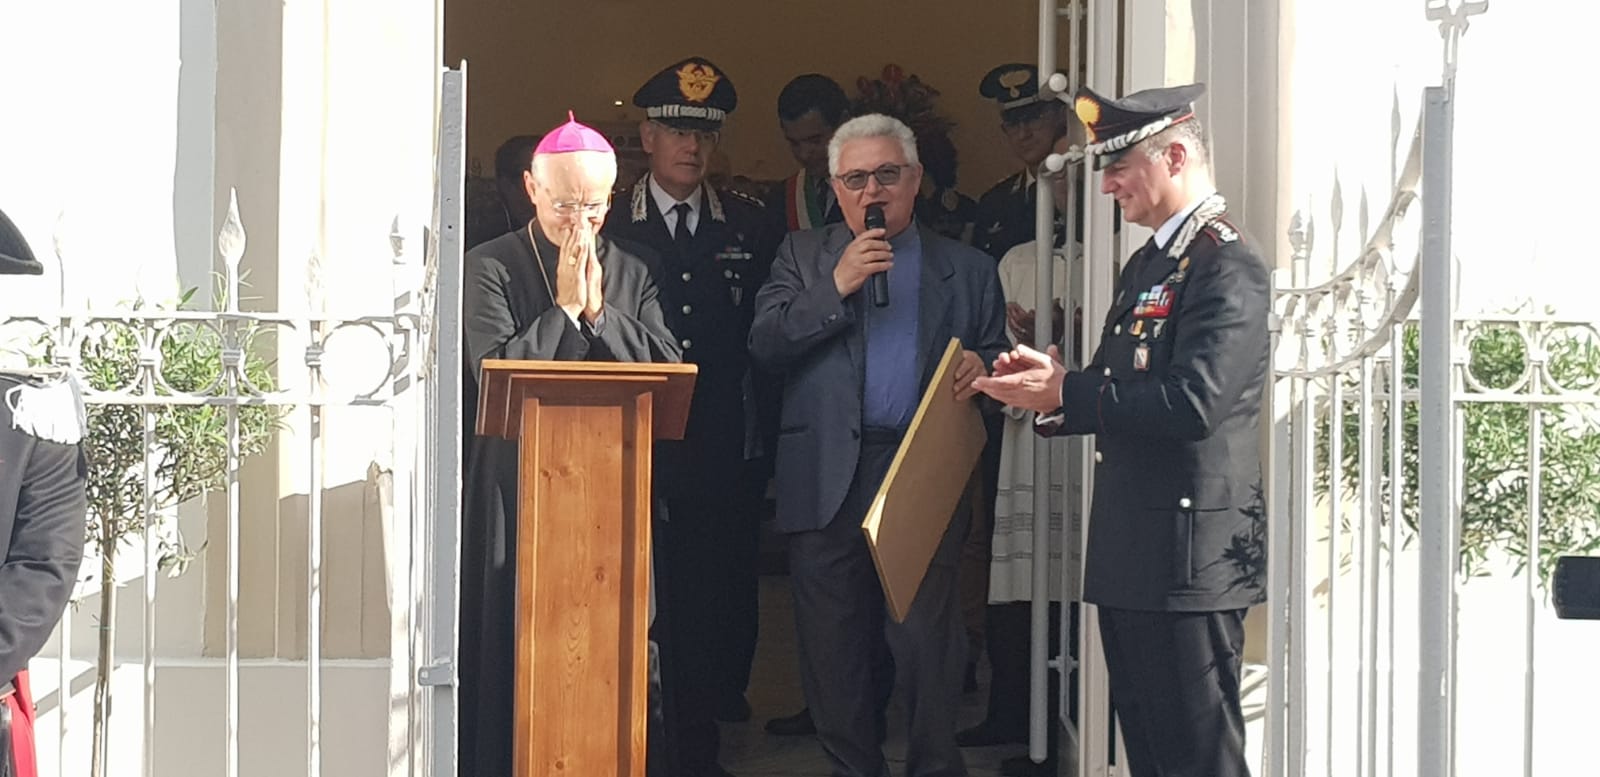 Avellino| Riaperta la cappella attigua al Comando dei carabinieri, dedicata alla Virgo Fidelis